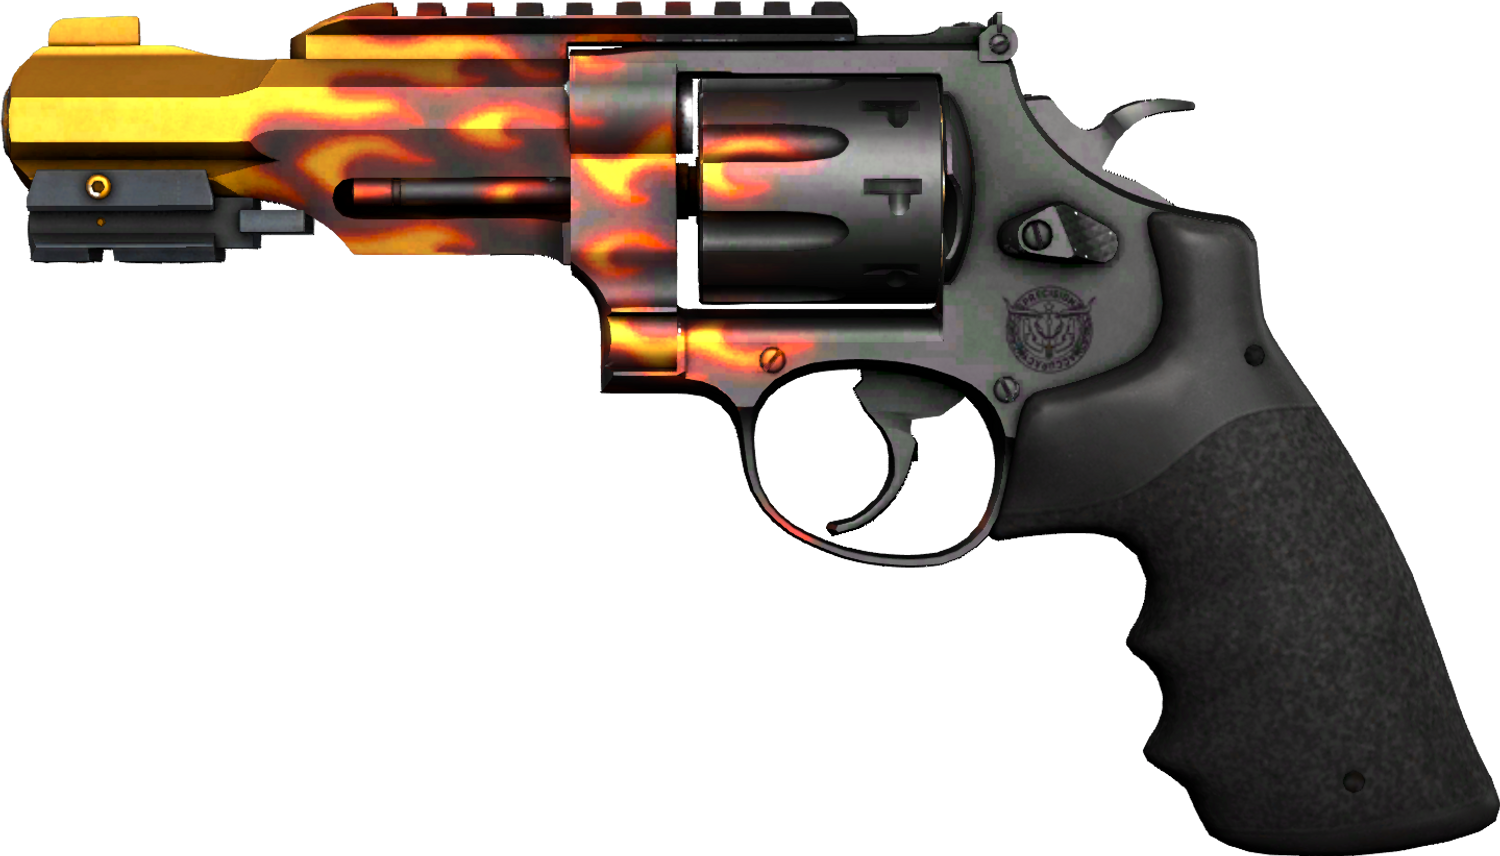 R8 Revolver Canal Spray cs go skin for ios download